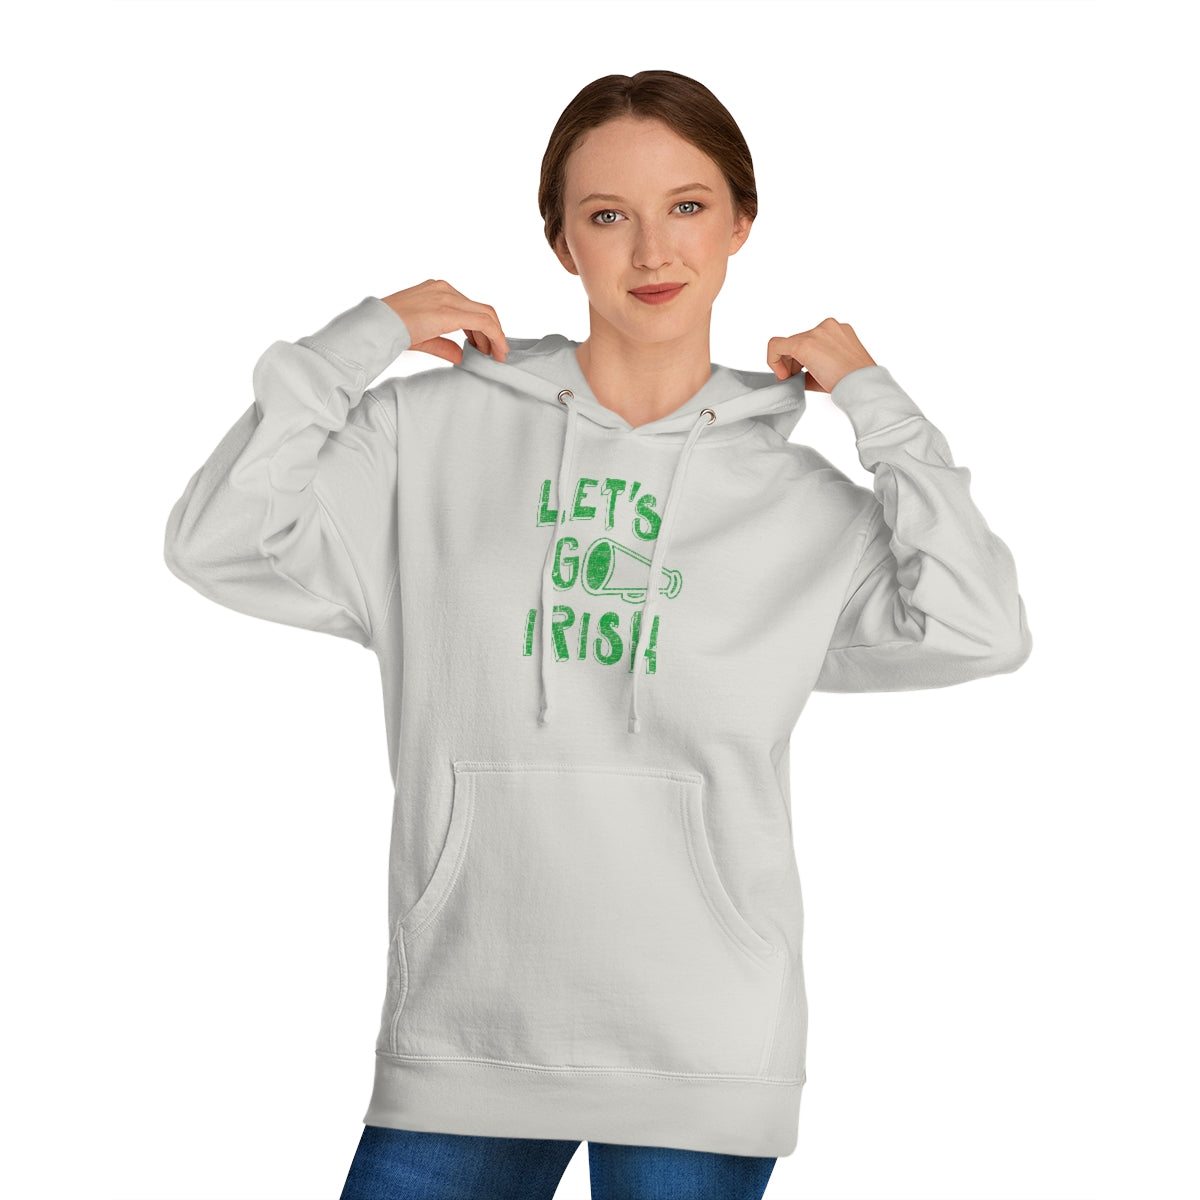 LET'S GO IRISH_MEGAPHONE-Unisex Hooded Sweatshirt